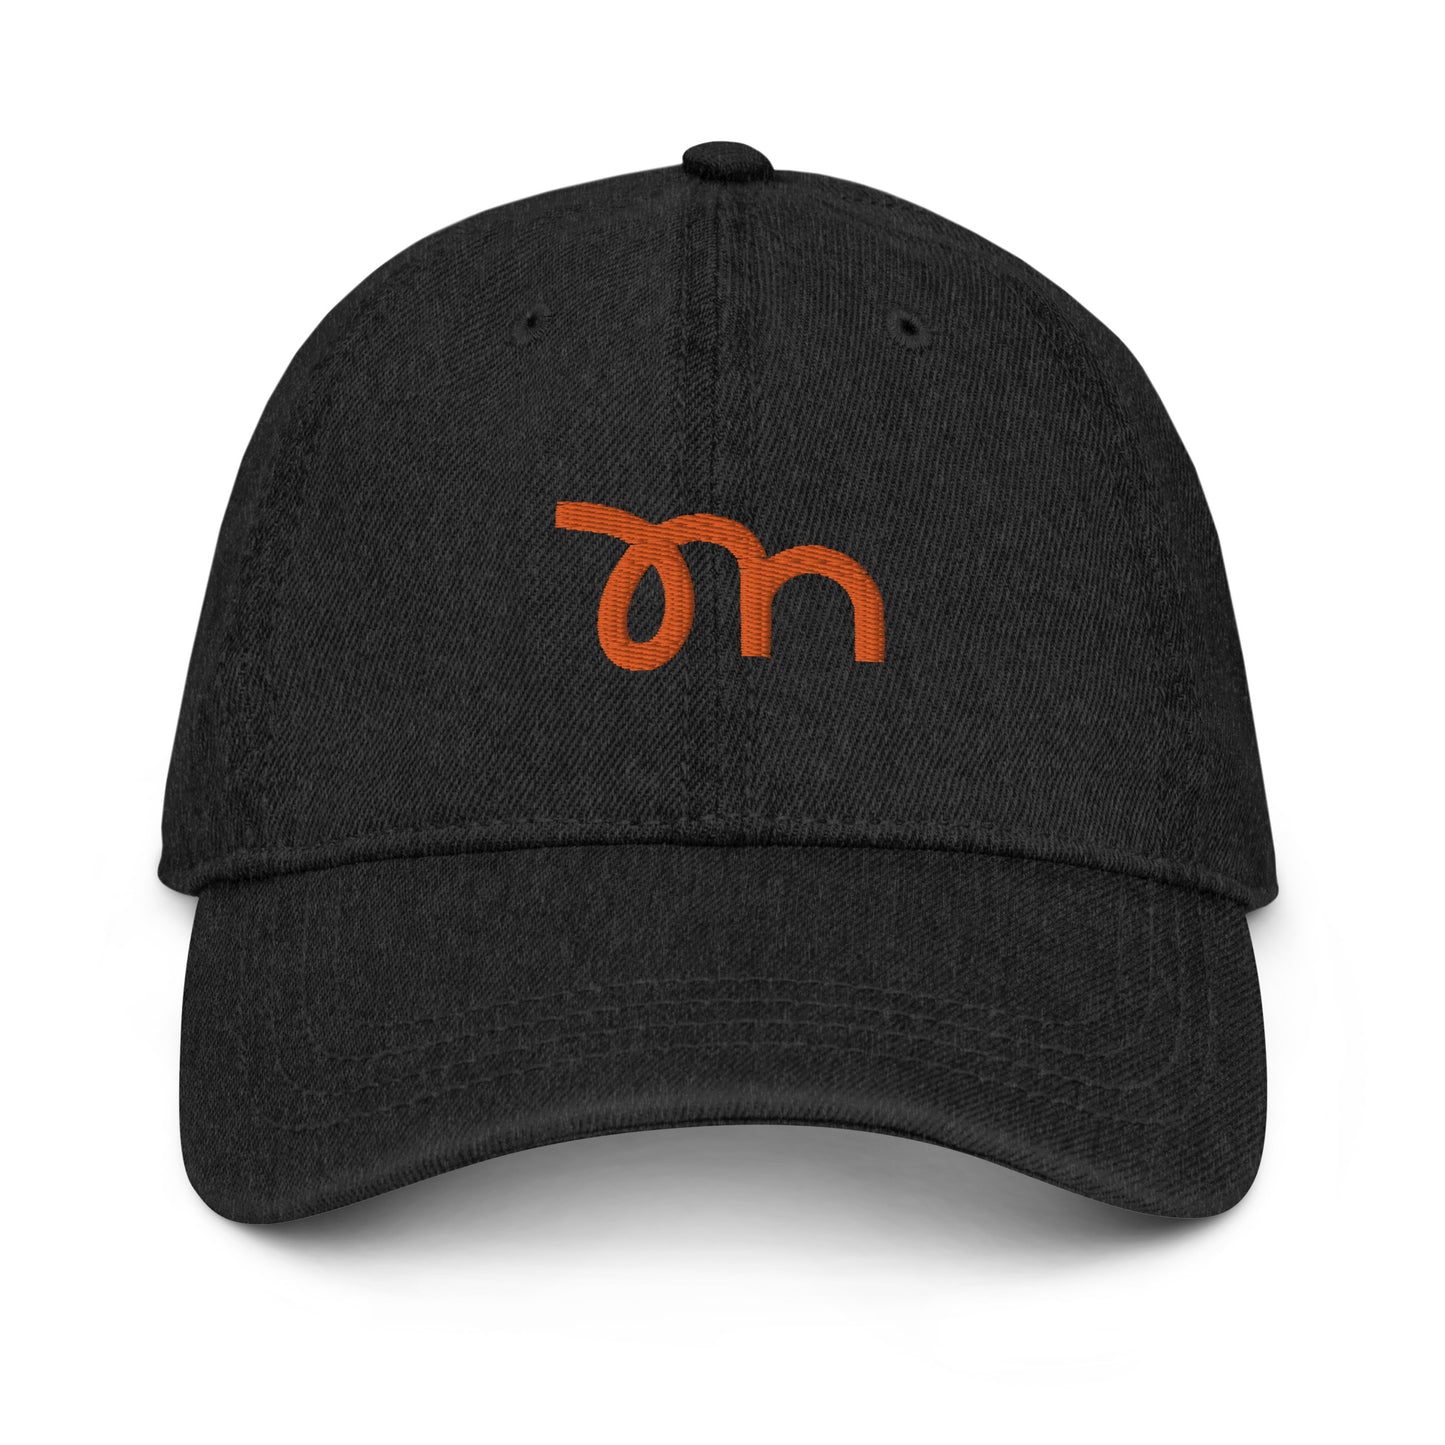 M for MoM Original Denim Hat